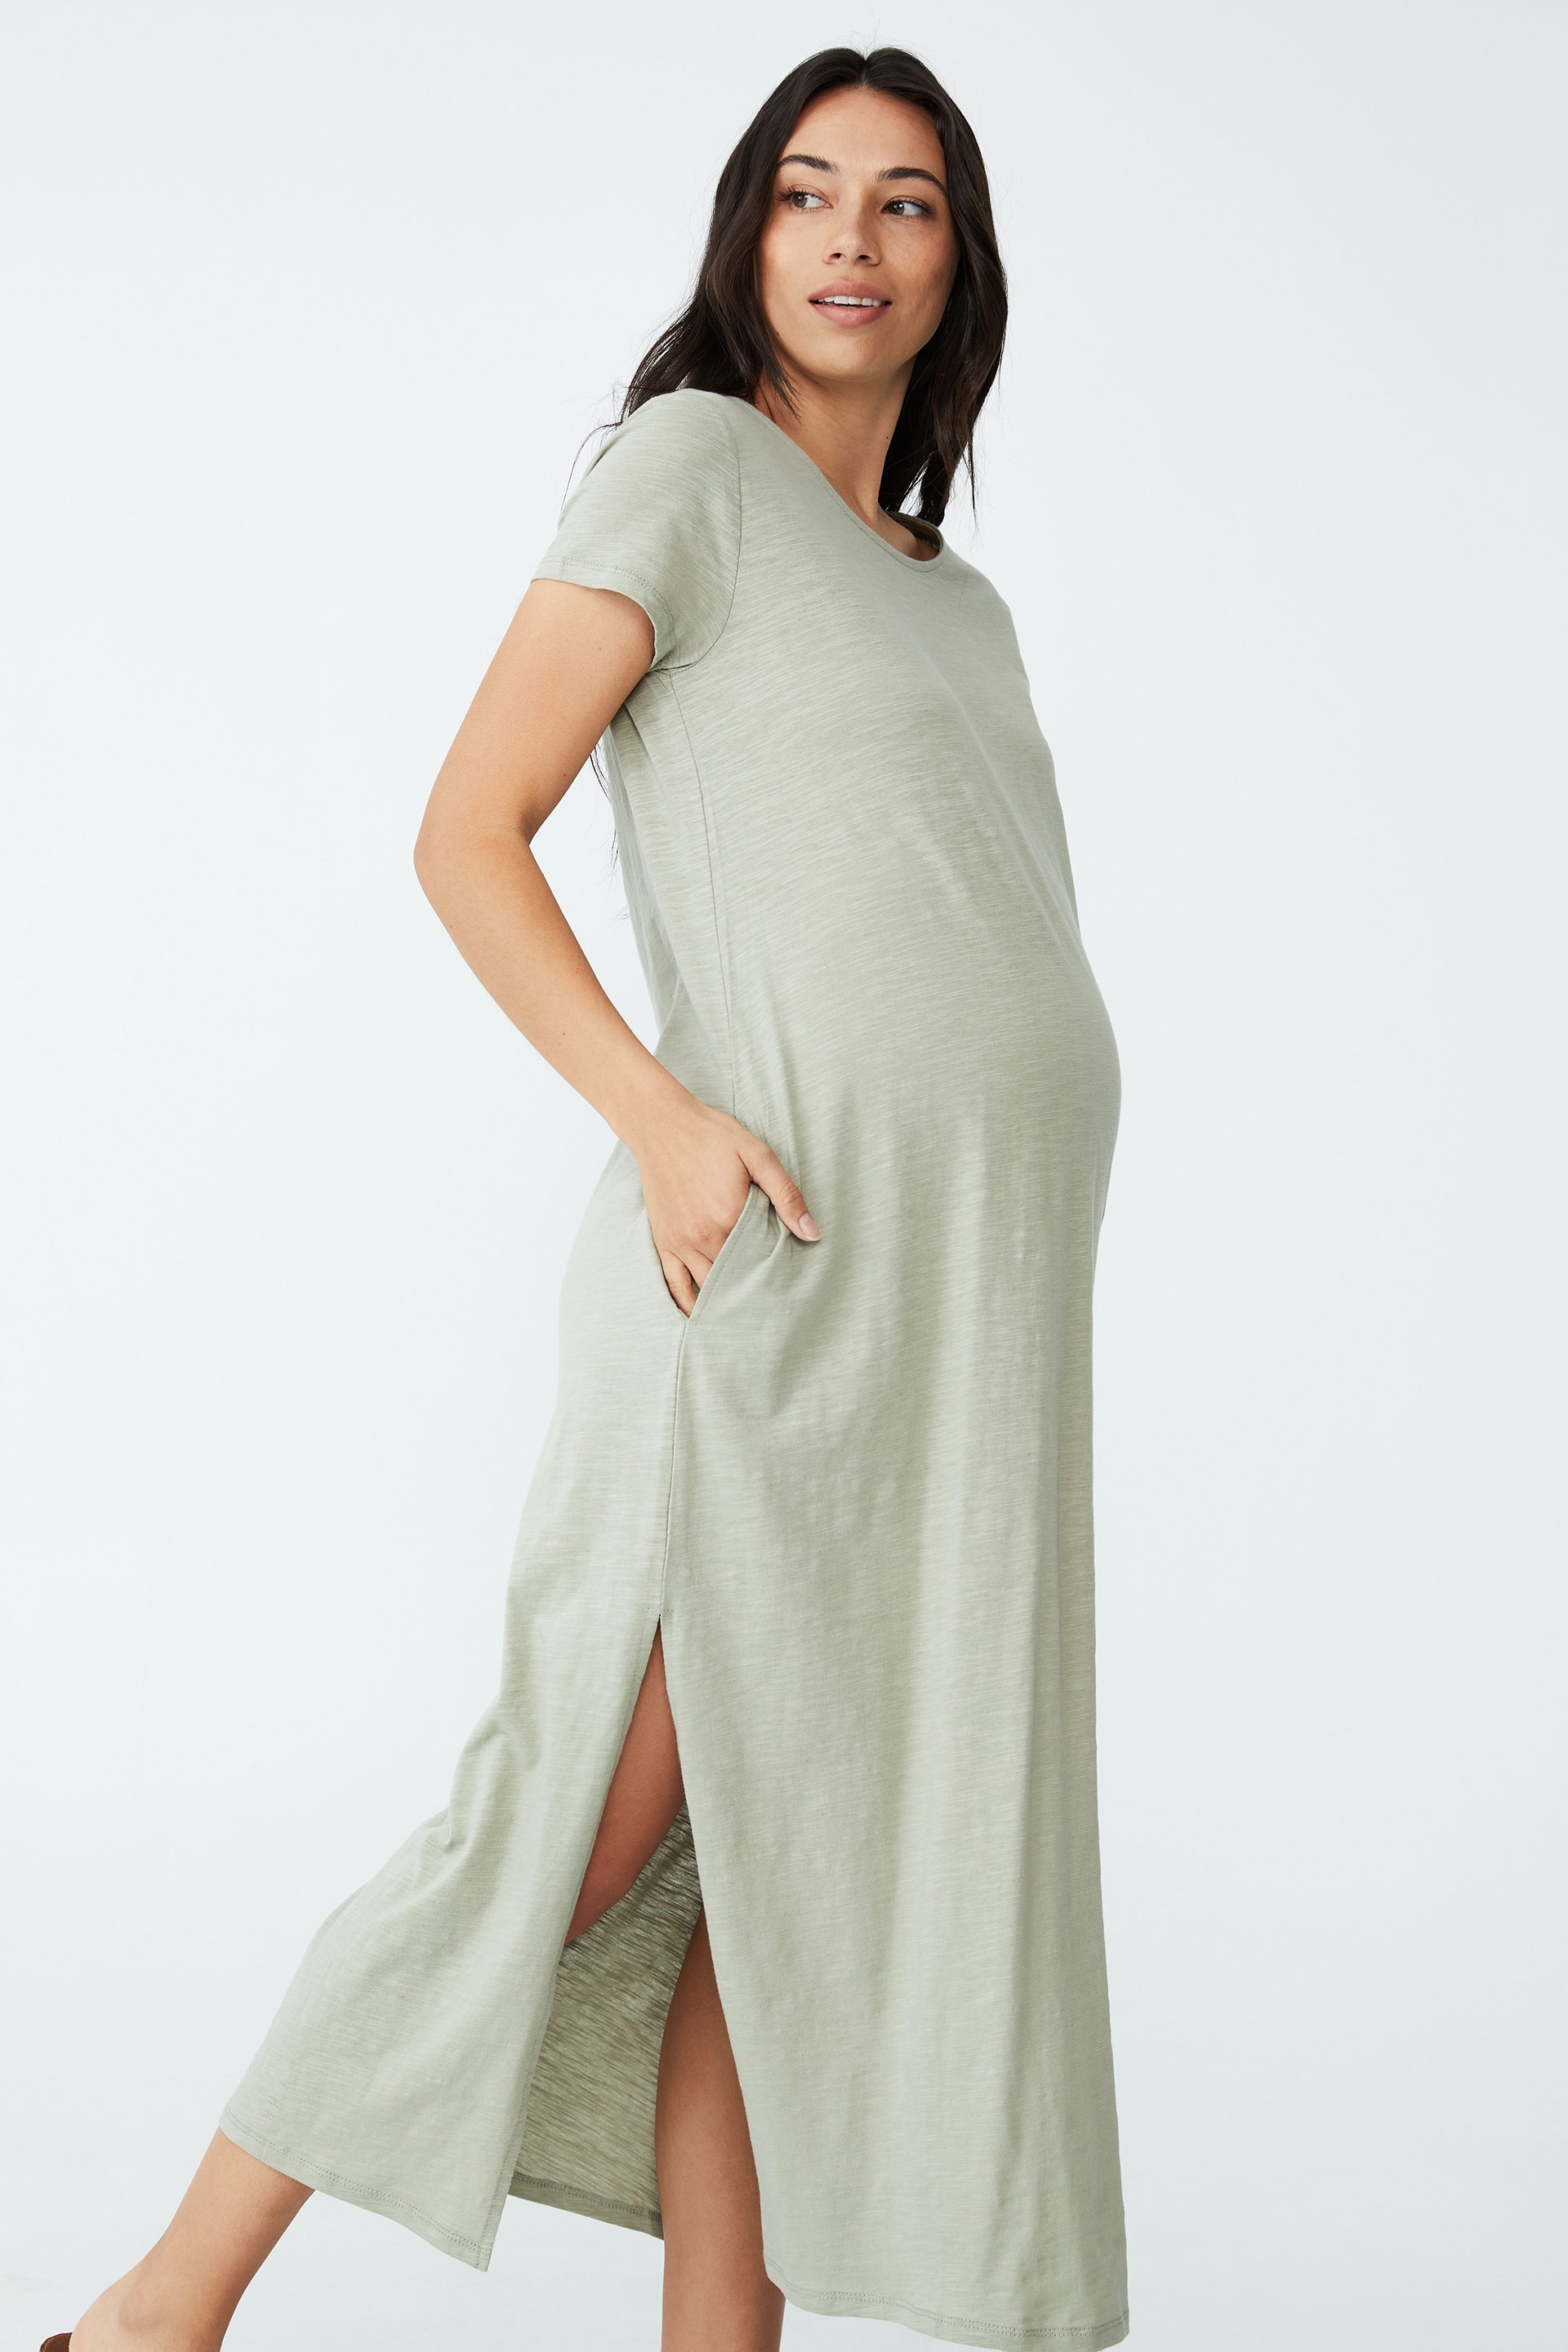 Cotton On Women - Maternity Loose Fit Short Sleeve Midi/Maxi Dress - Sage #1